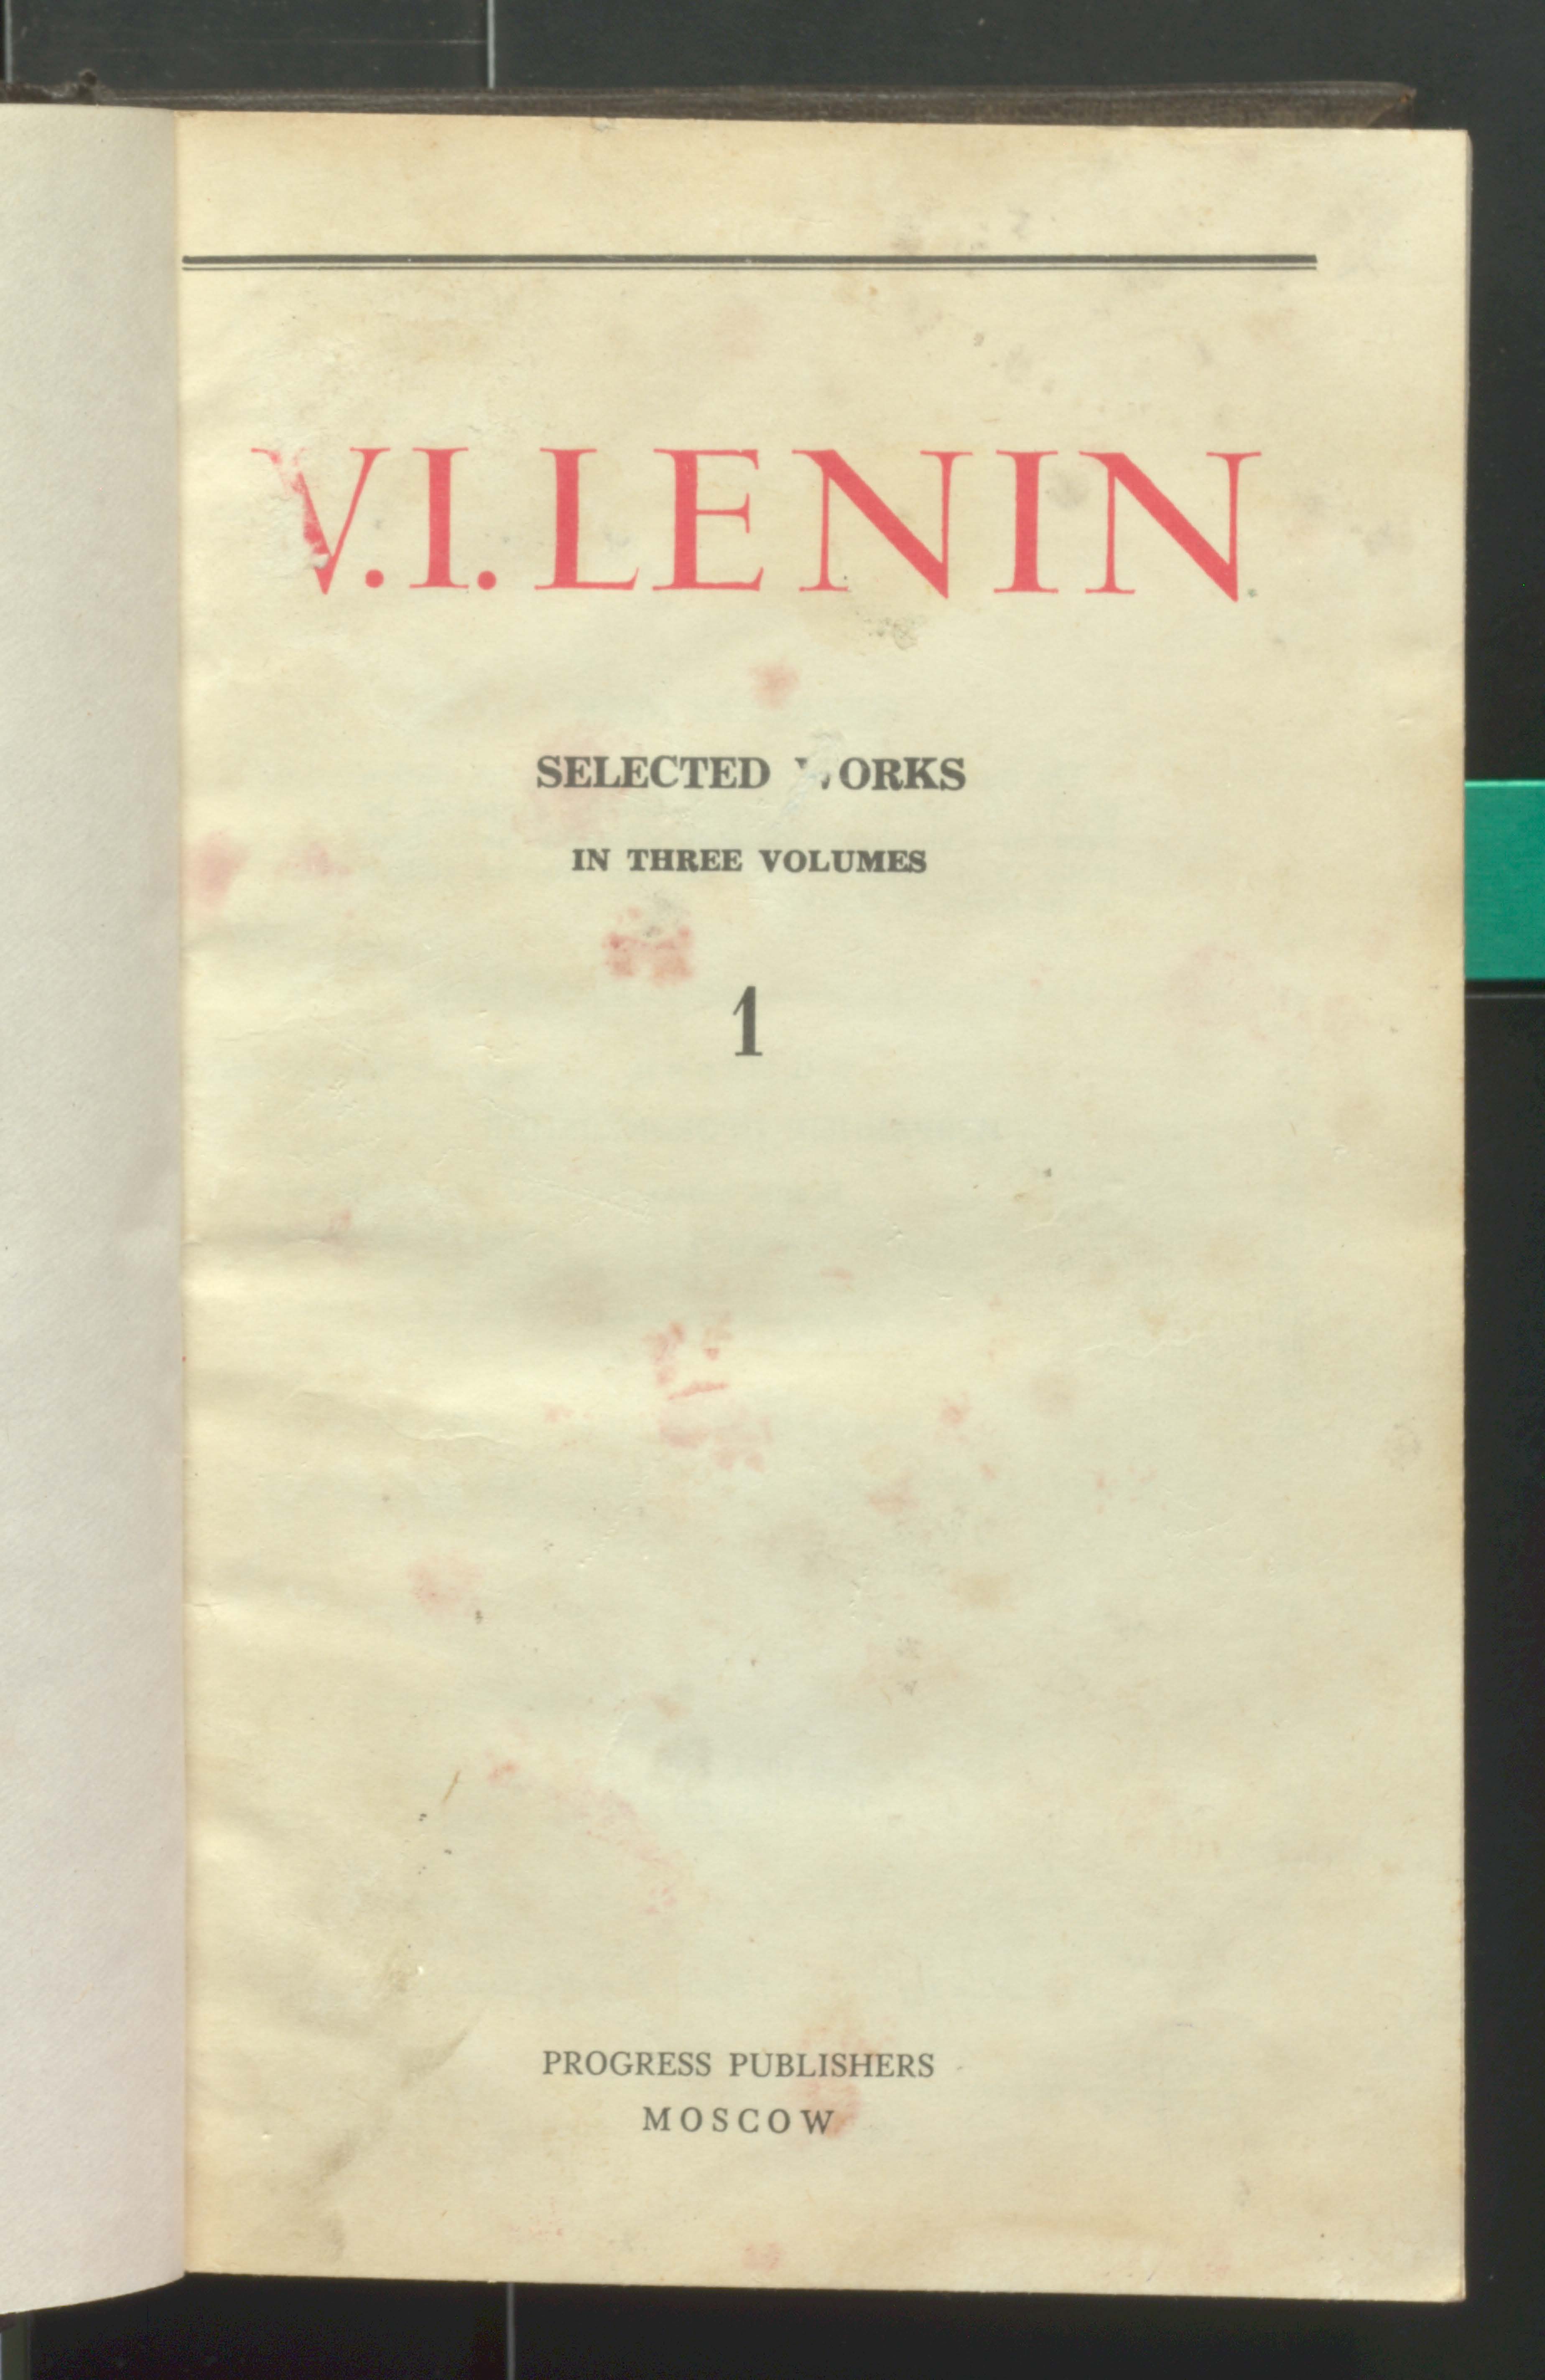 V.L.LENIN selected works in three (vol-1)